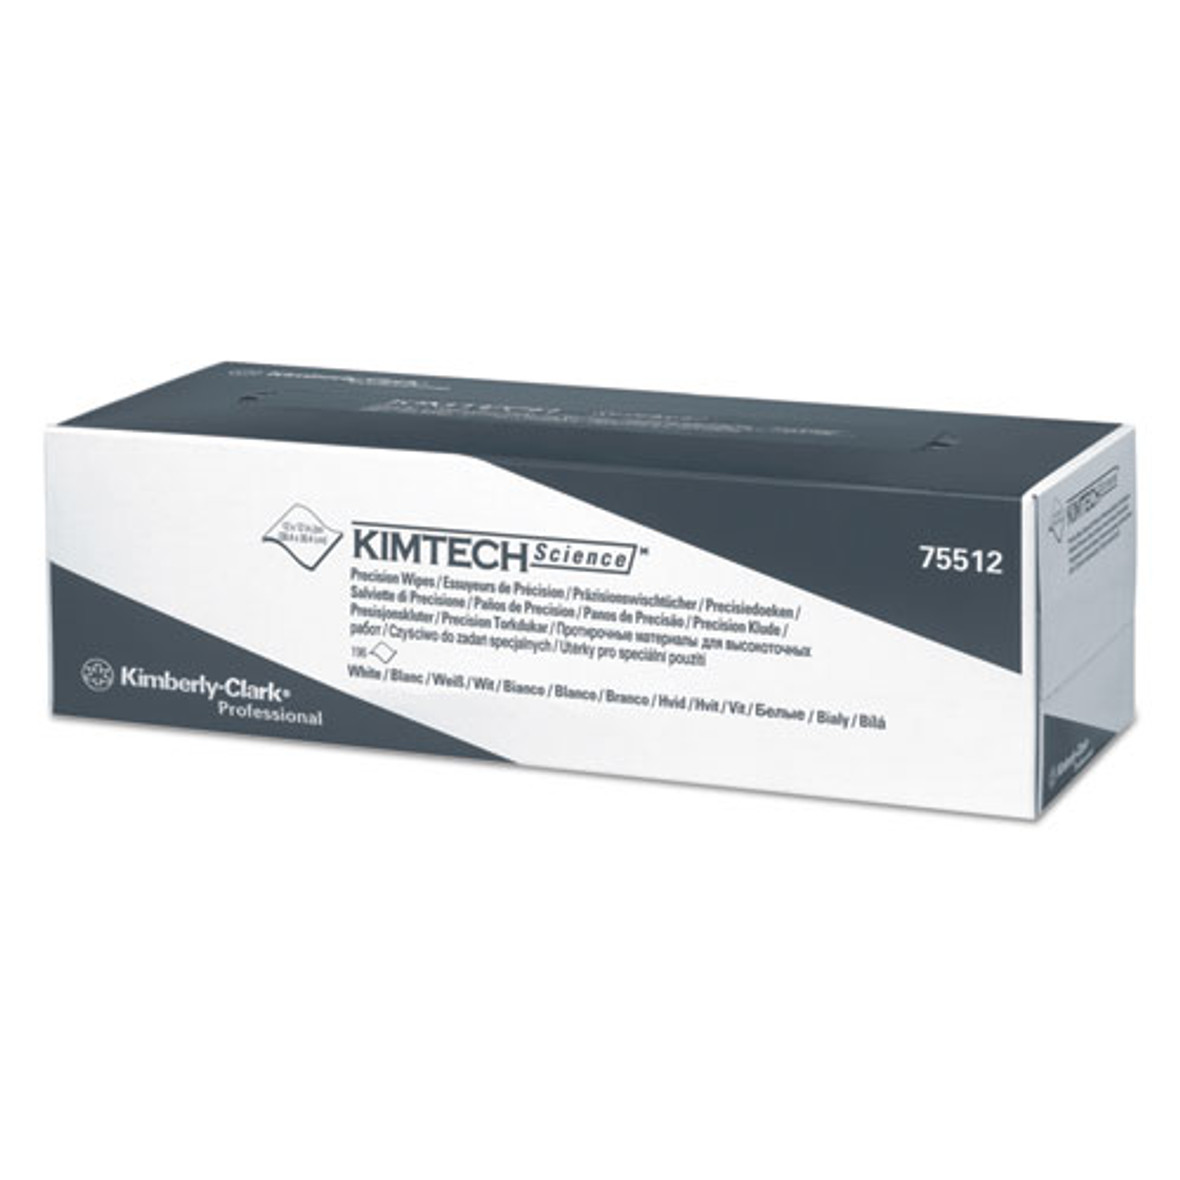 Kimtech™ Precision Wipers, Pop-up Box, 1ply, 11 4/5x11 4/5, White, 196/Box, 15 Box/Carton